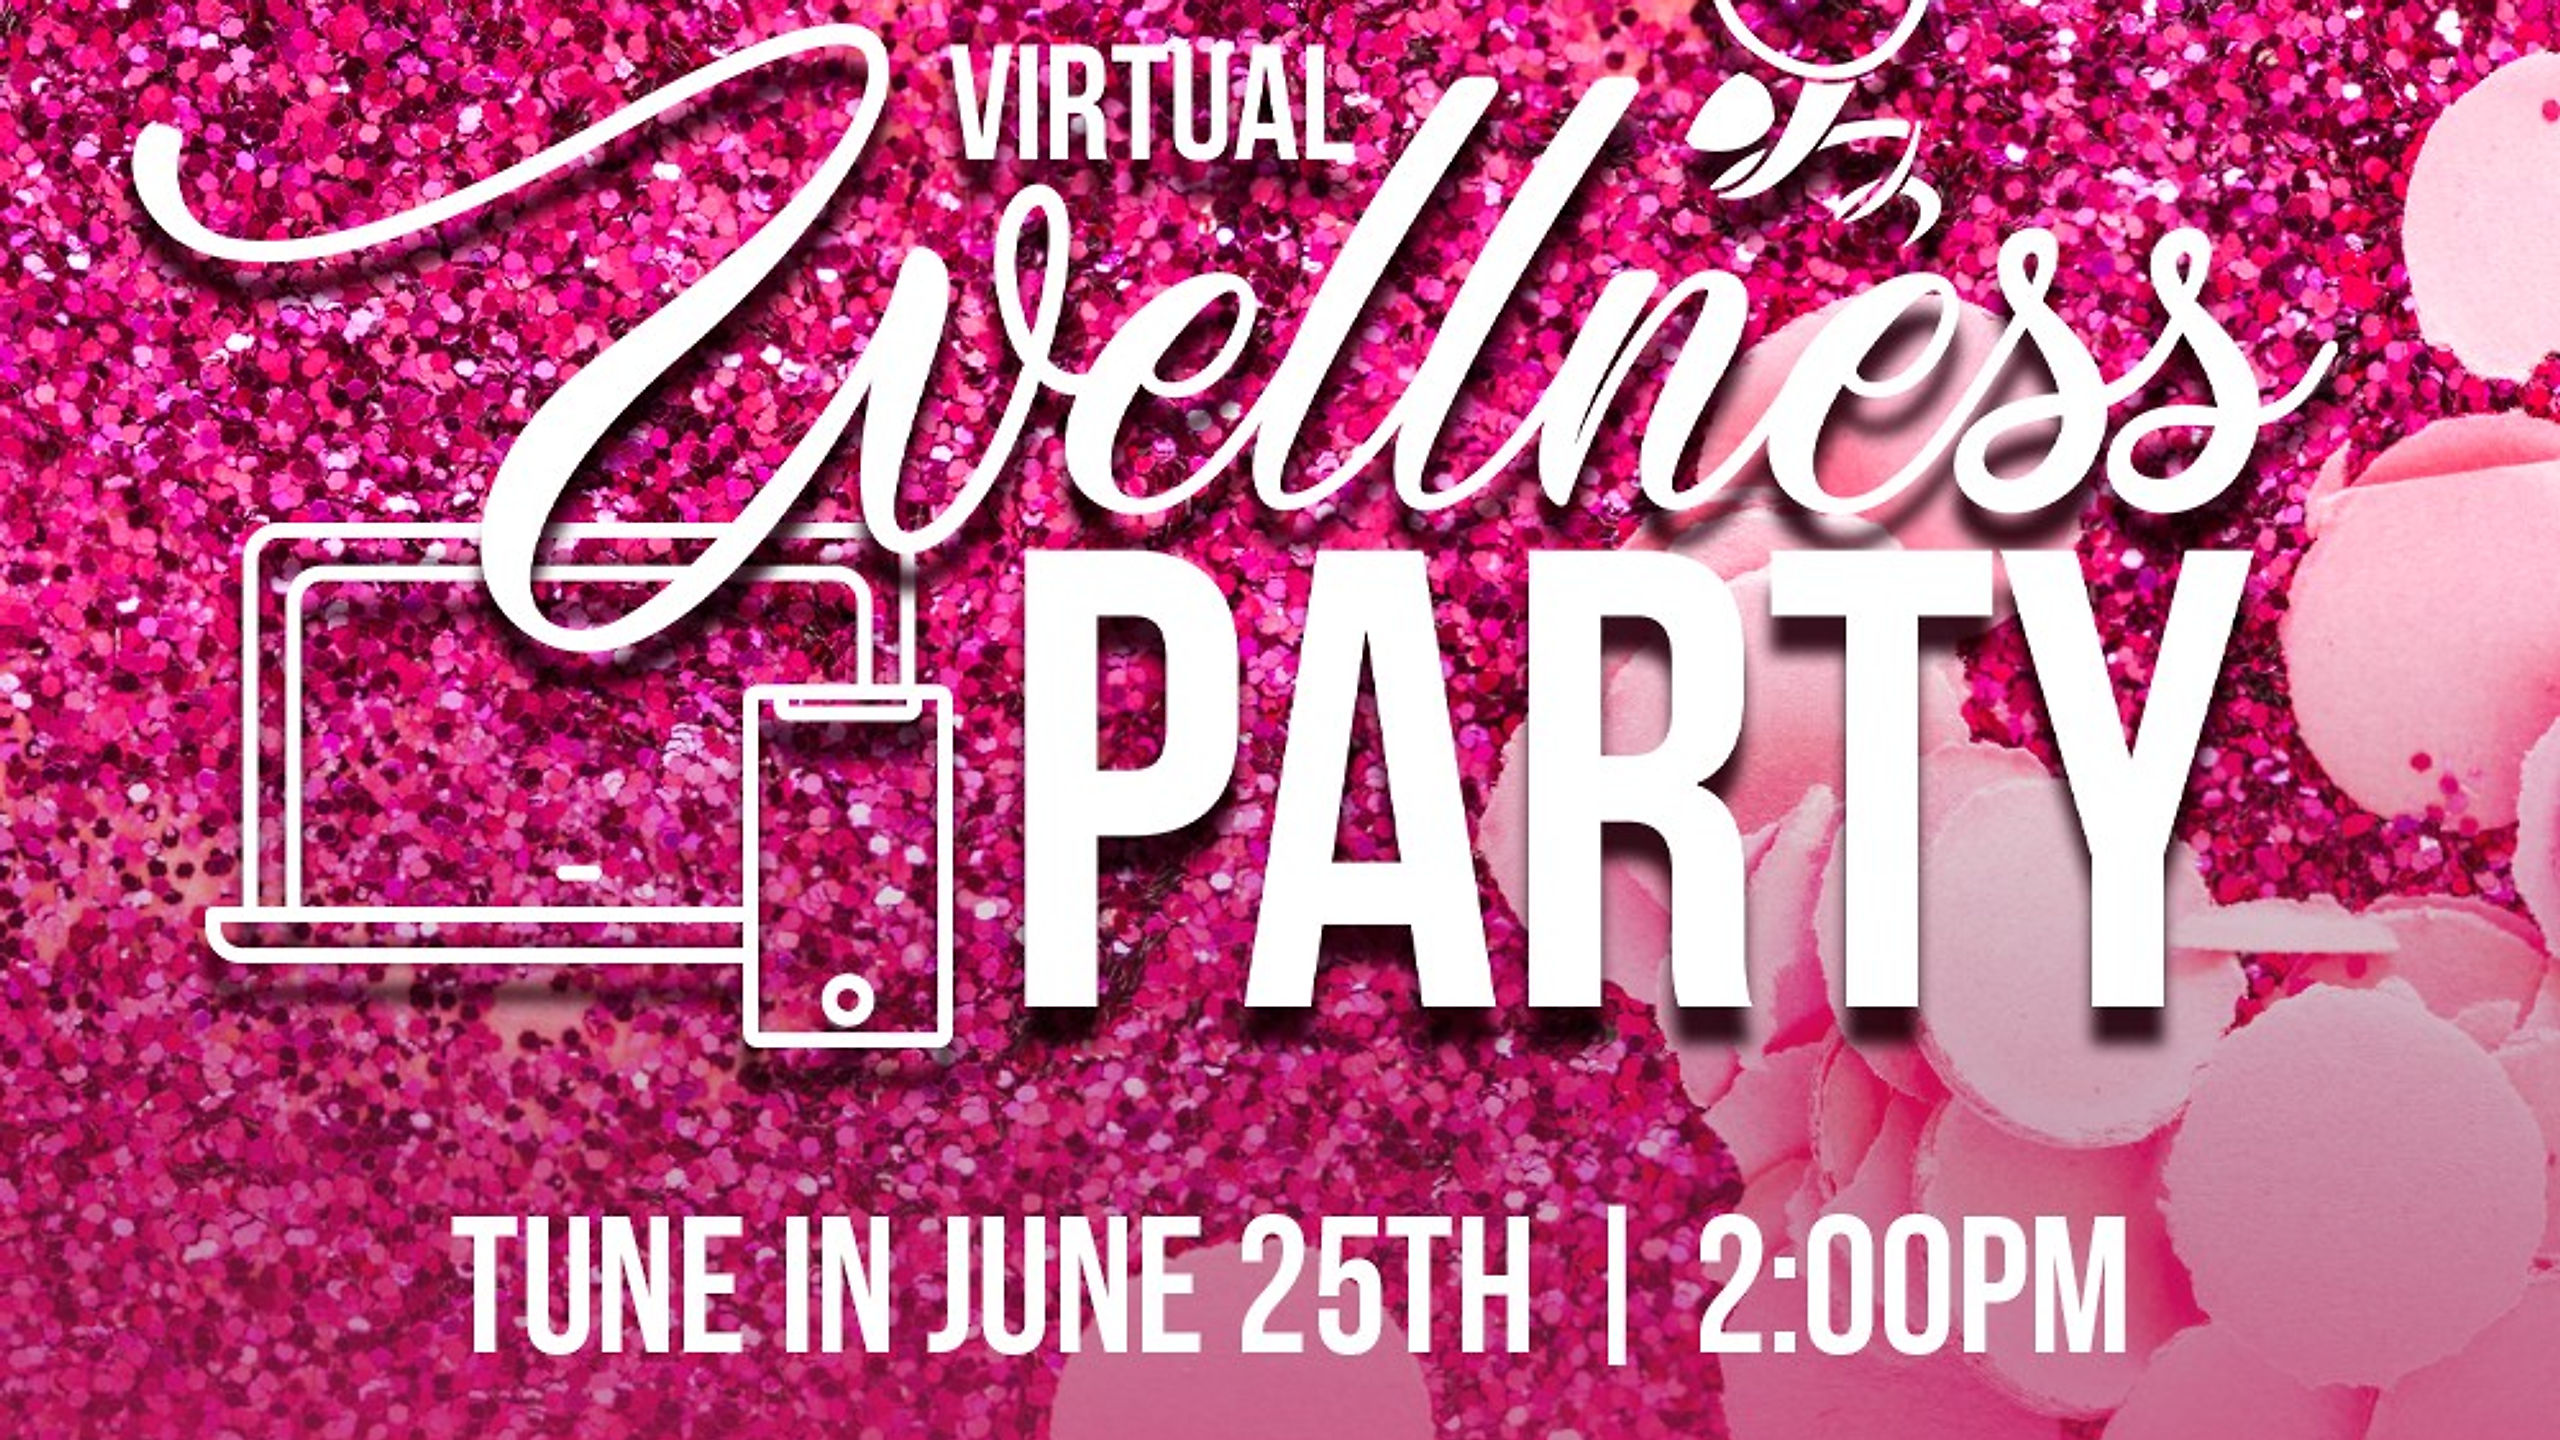 Virtual Wellness Party